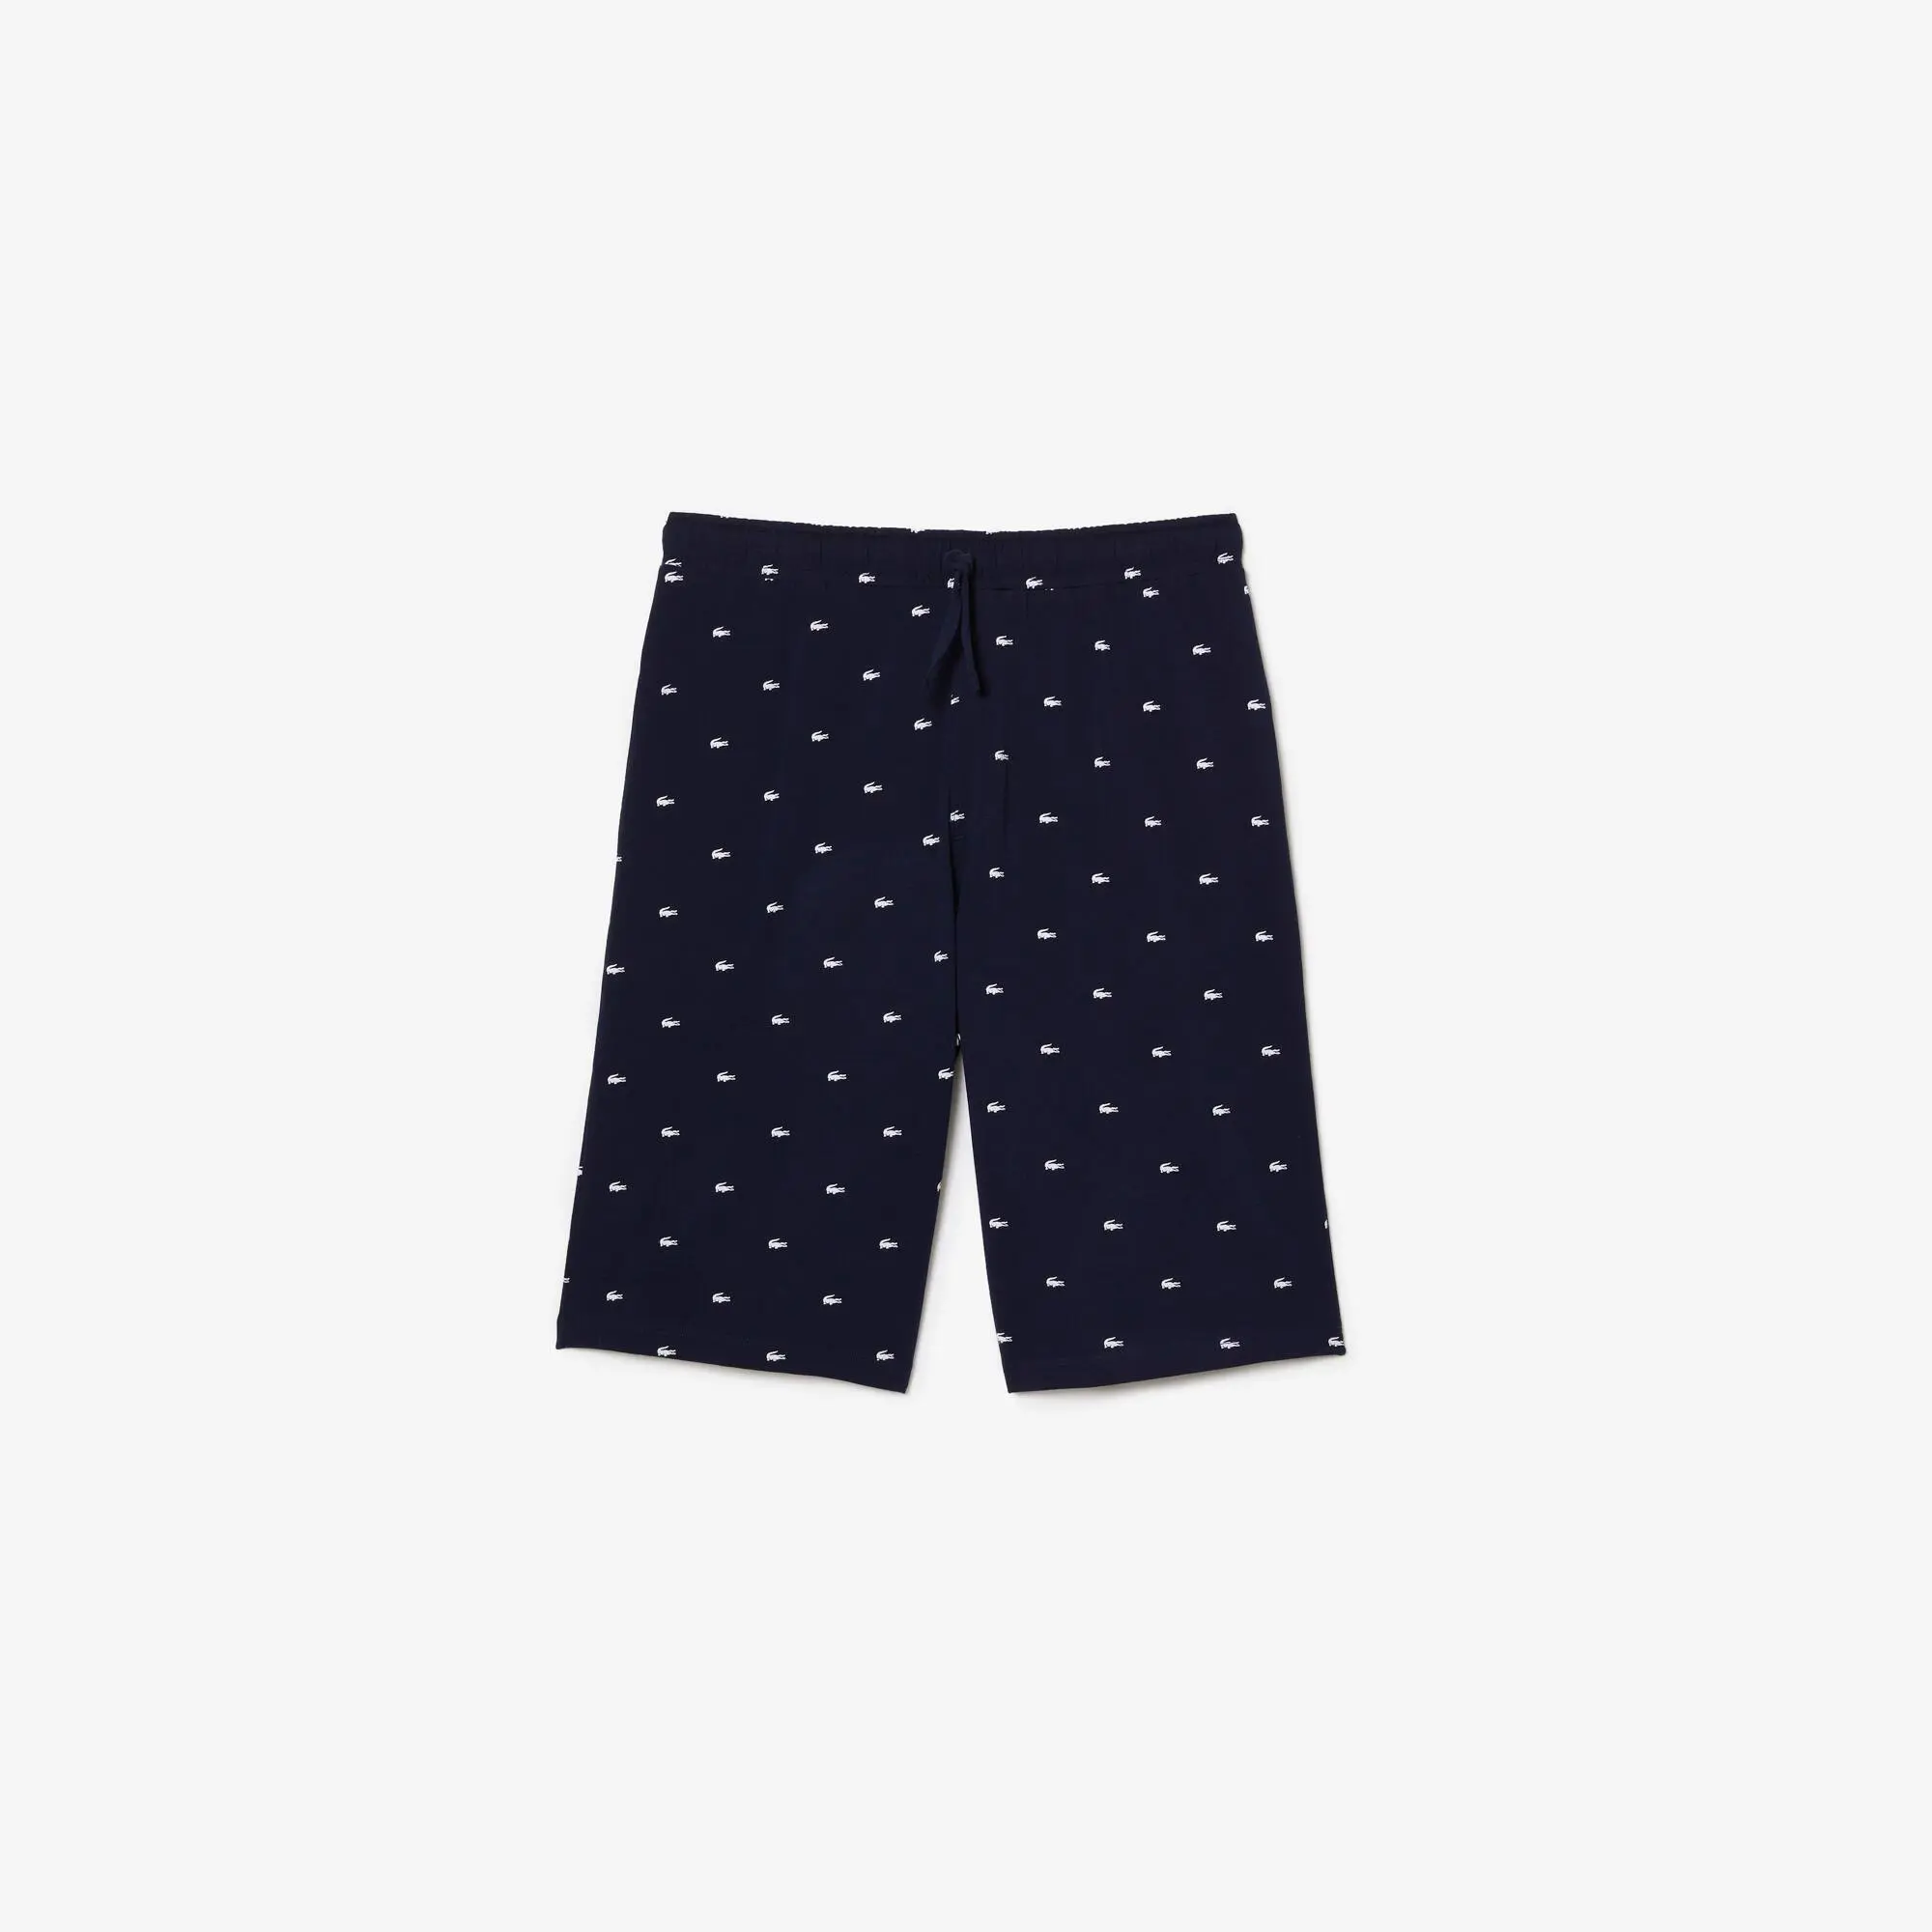 Lacoste Men’s Crocodile Print Cotton Jersey Pyjamas Shorts. 2